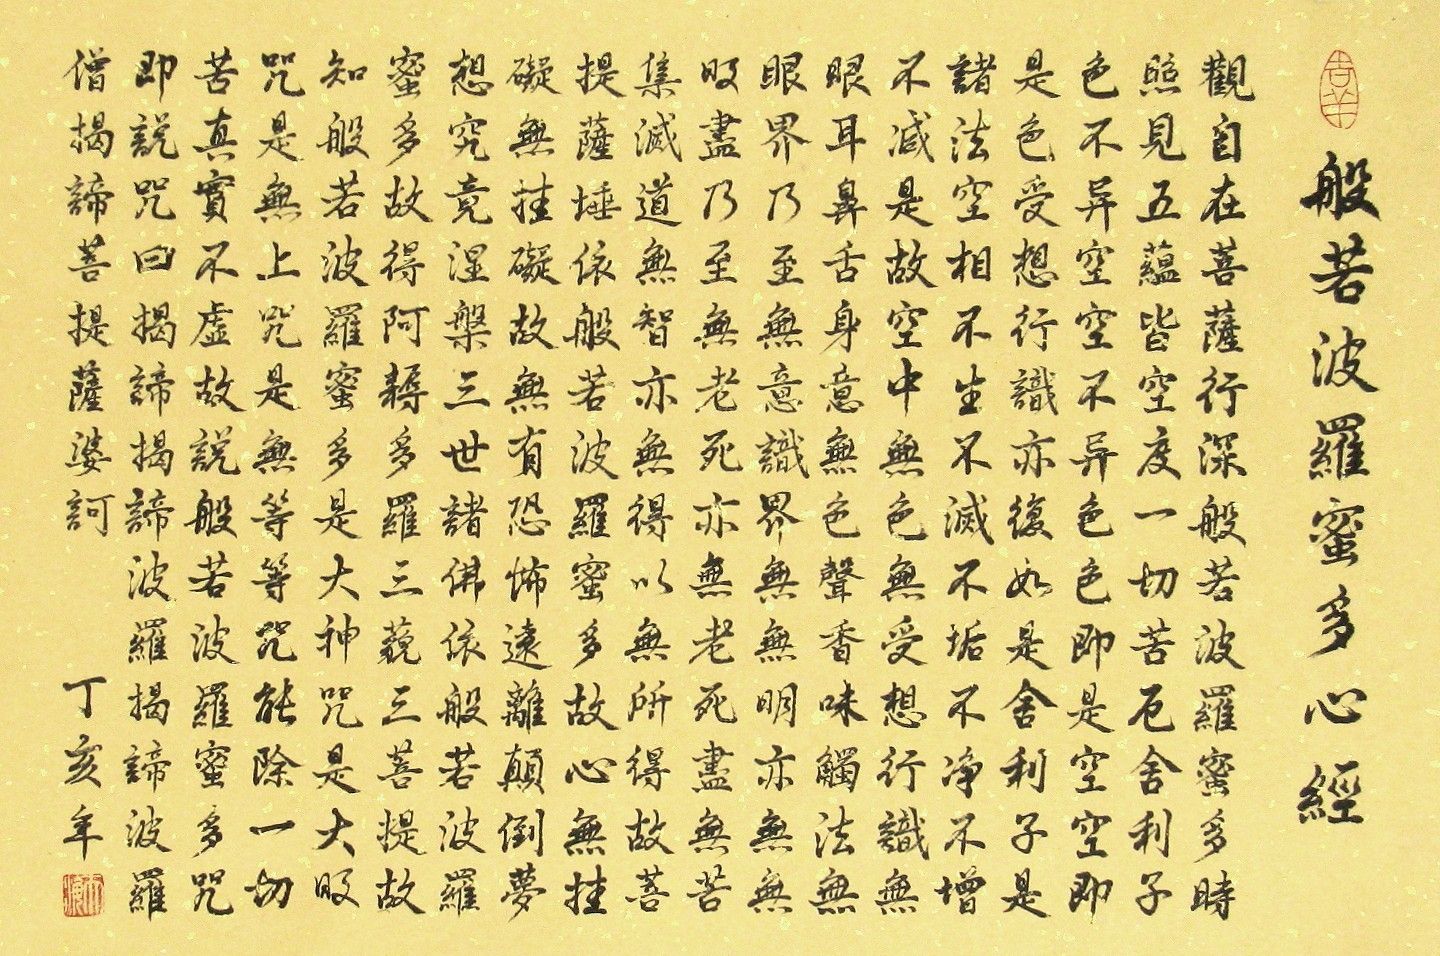 Chinese Writing Wallpaper Free Chinese Writing Background